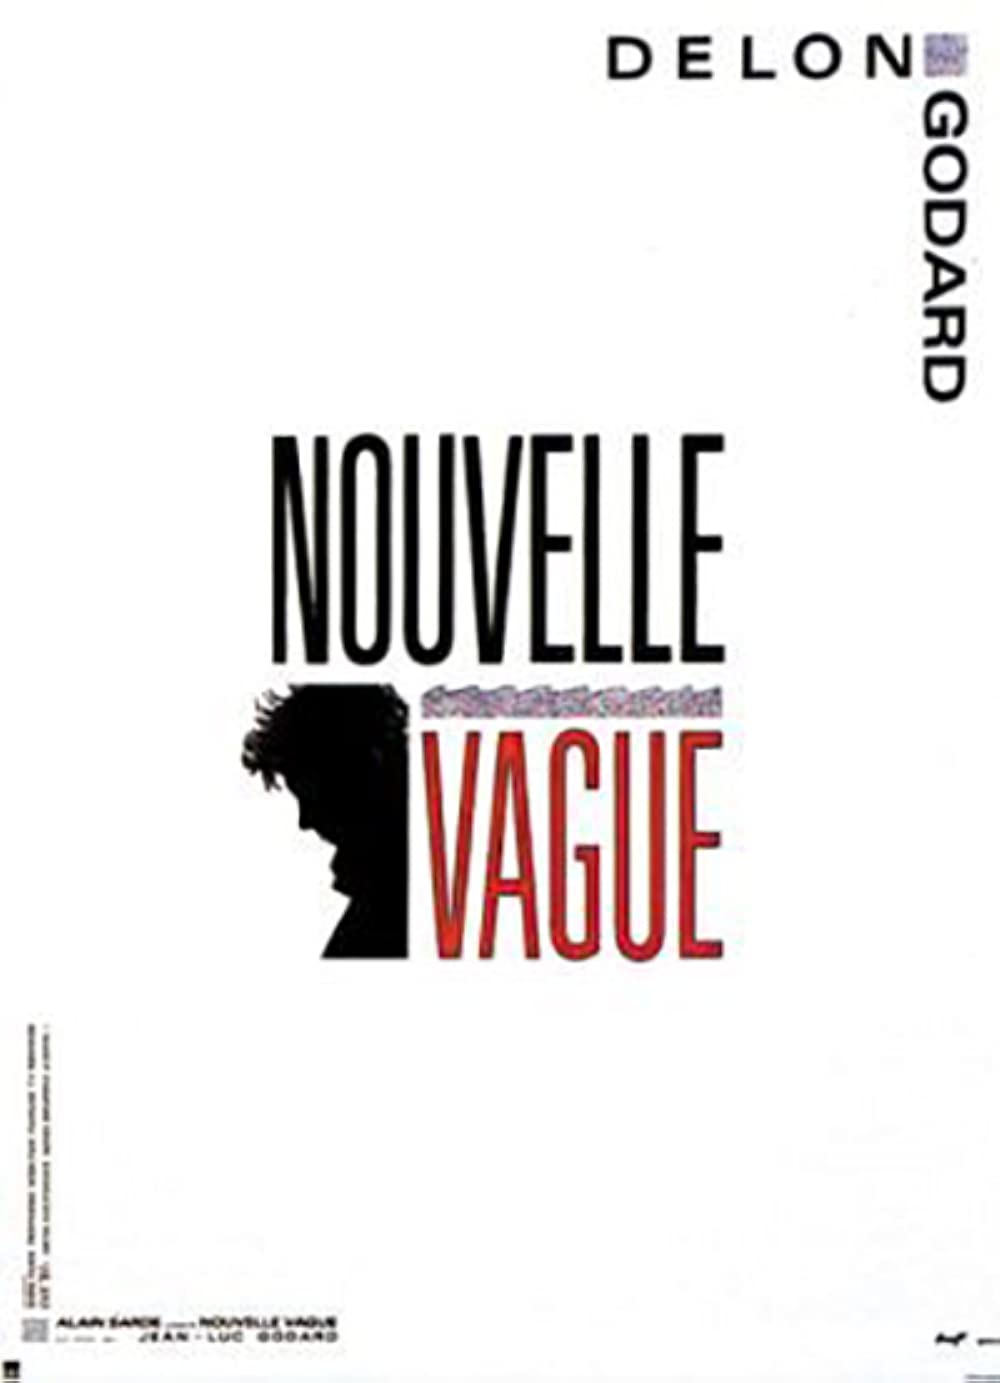 Filmbeschreibung zu Nouvelle Vague (OV)